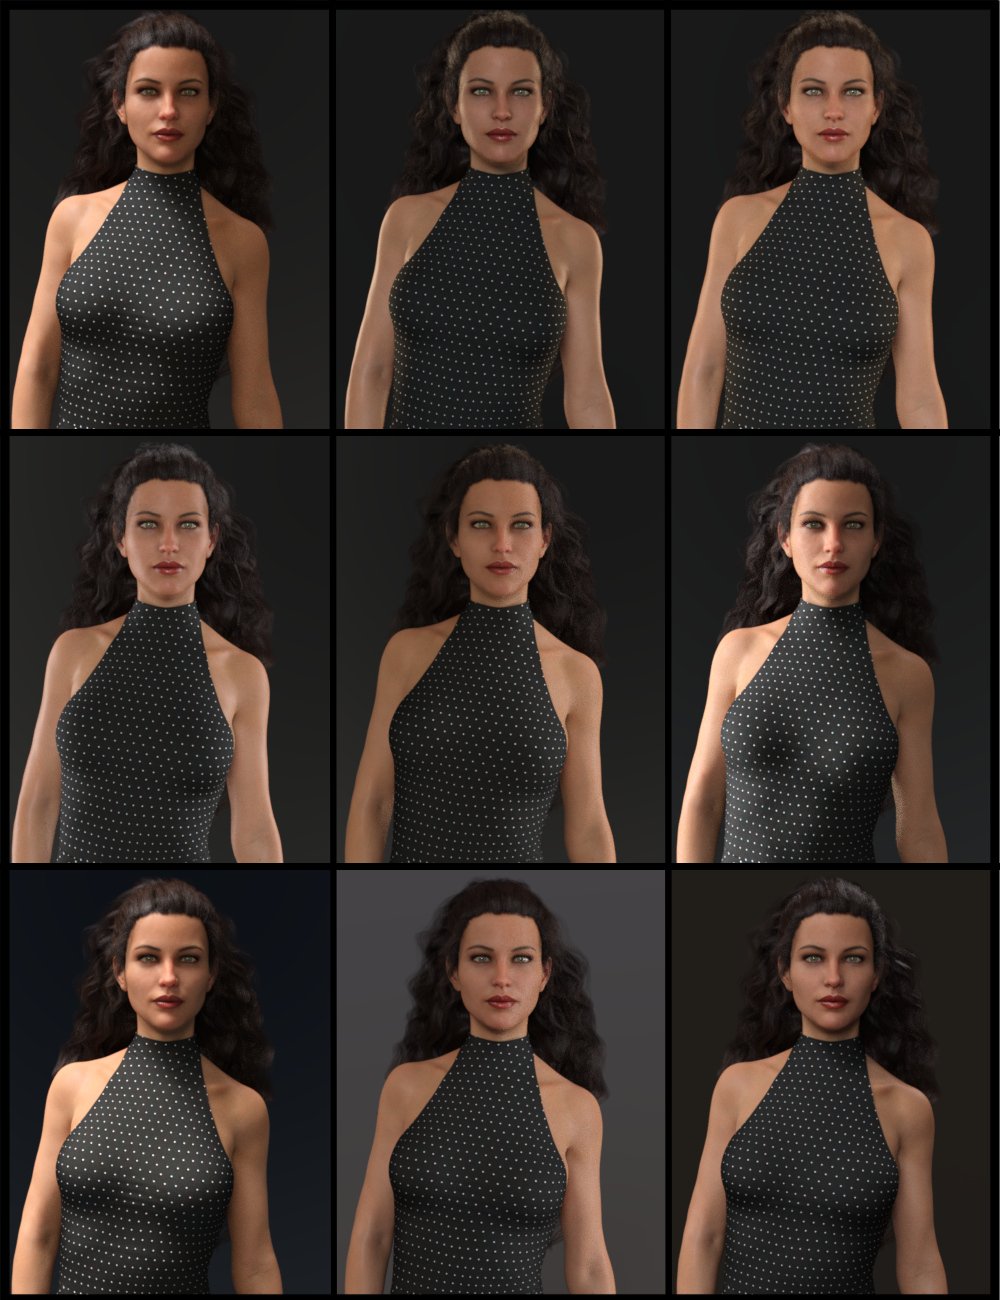 Easy Portraits - Light Presets by: Khory, 3D Models by Daz 3D